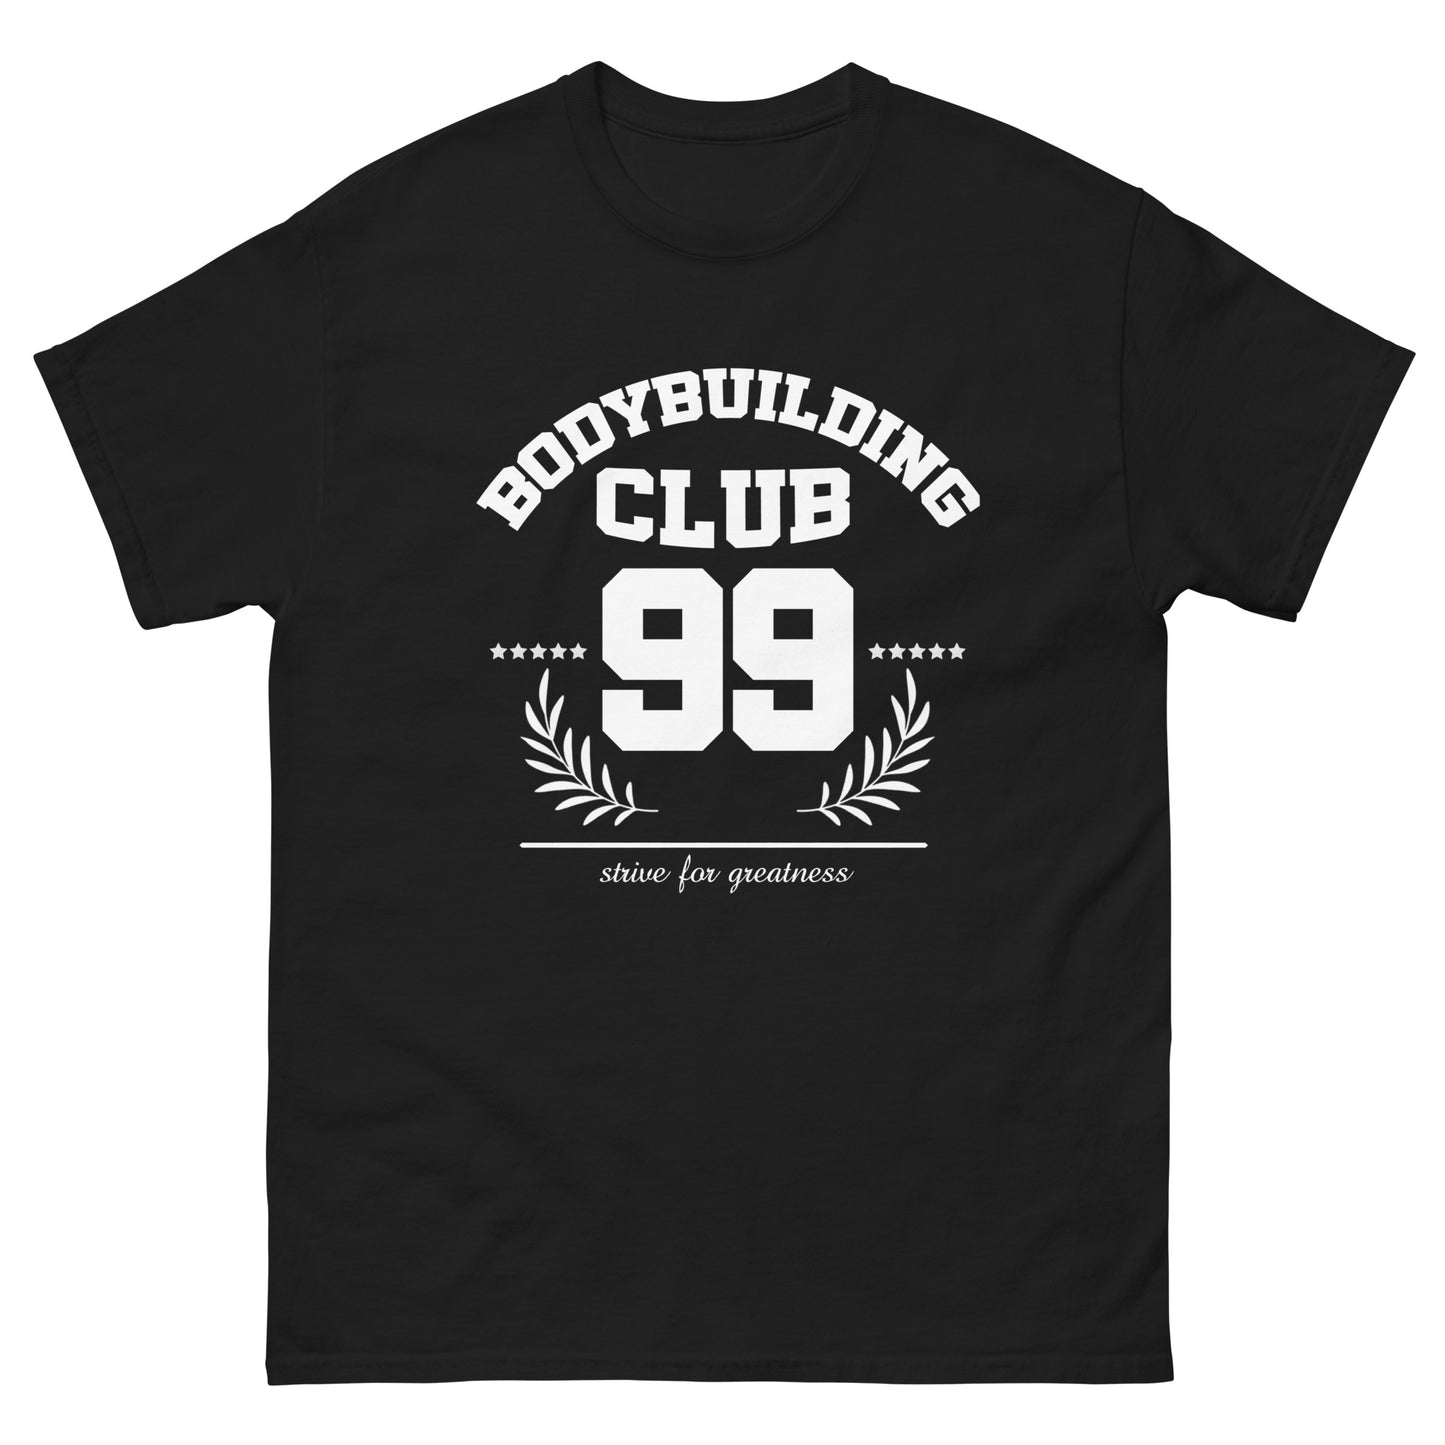 "Bodybuilding club" - Classic T-Shirt